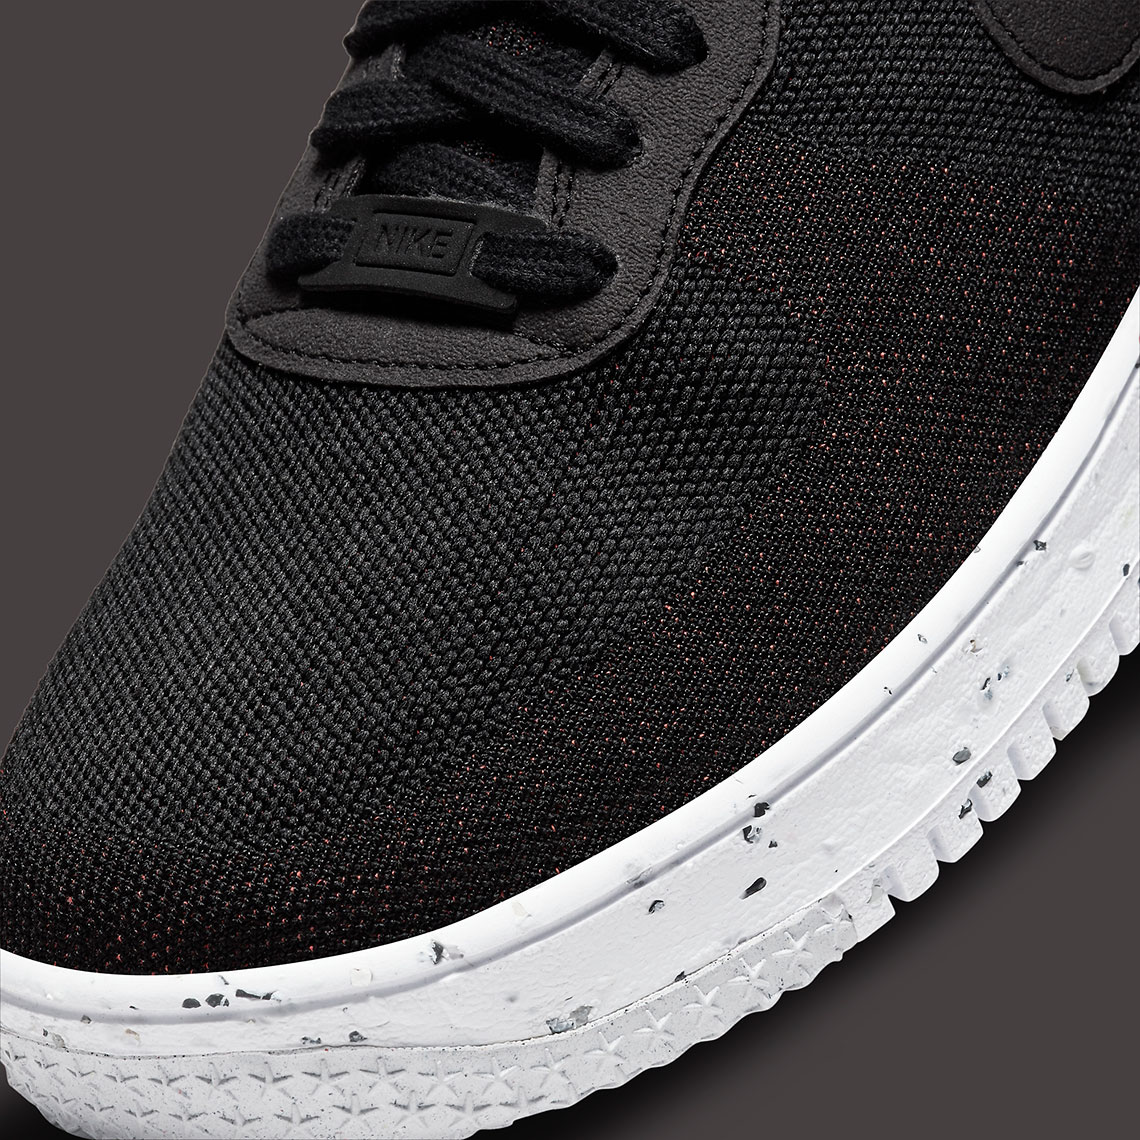 michael jordan air nike brand shoes for girls Crater Flyknit Black Anthracite White Black Dc4831 003 3